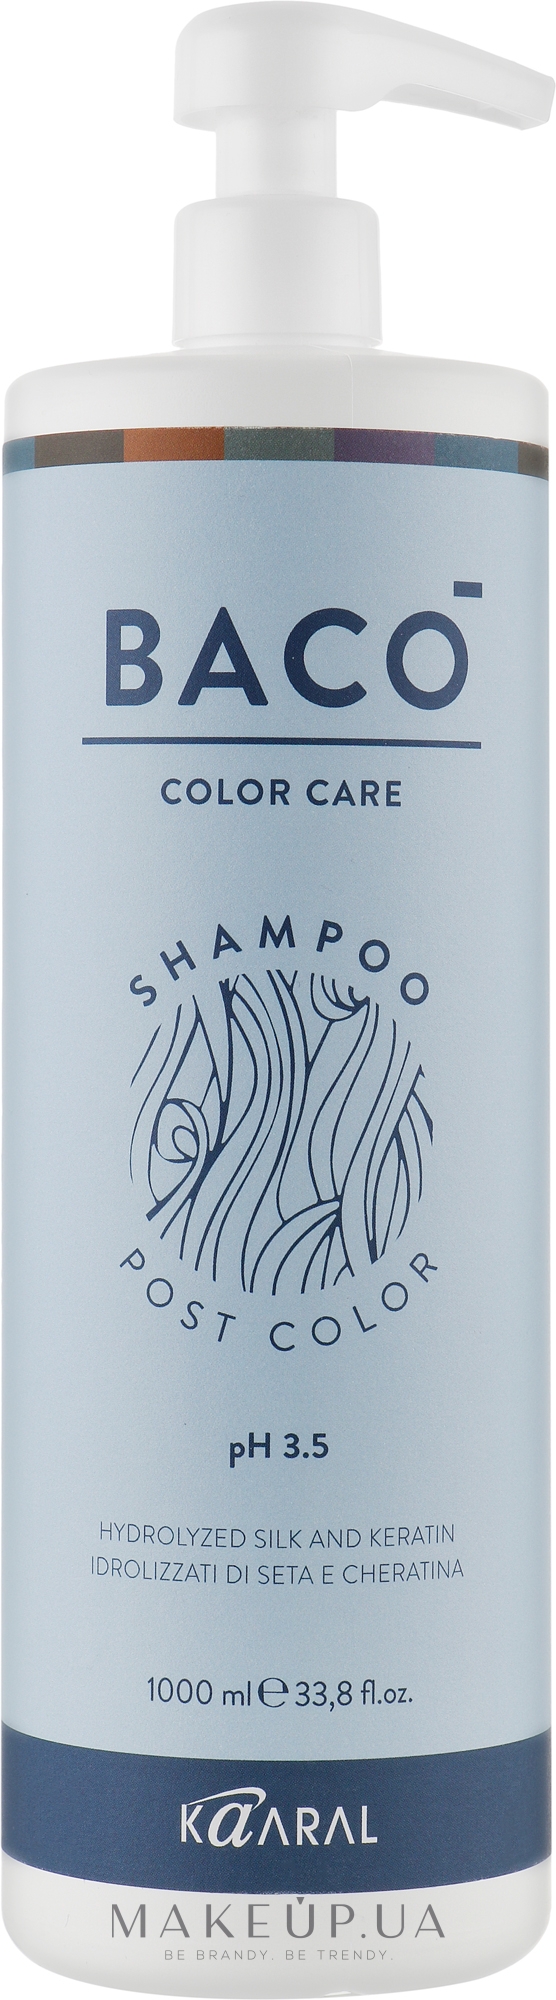 Шампунь для волос после окрашивания - Kaaral Baco Color Care Post Color Shampoo pH3,5 — фото 1000ml